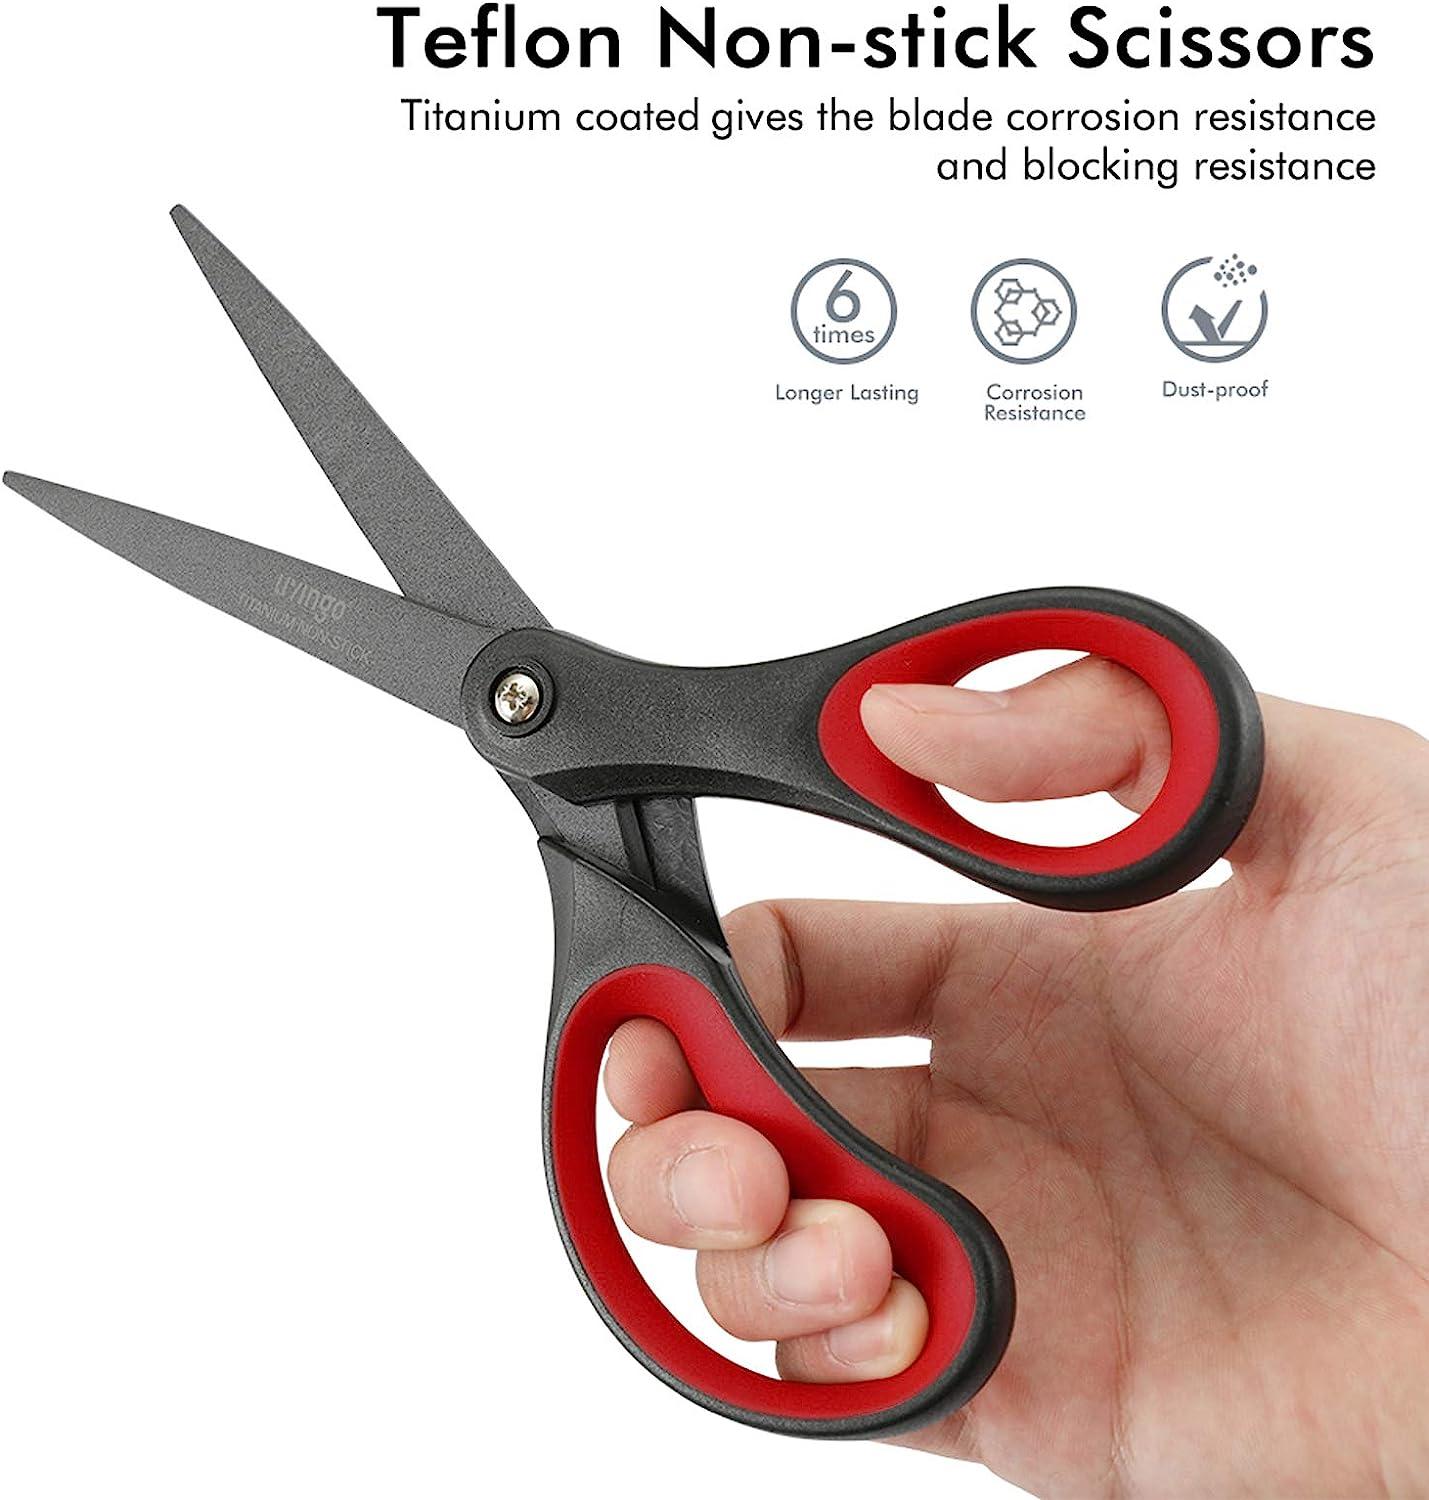 Scotch 6 Precision Scissors, Great for Everyday Use (1446) 6-Inches Scissor